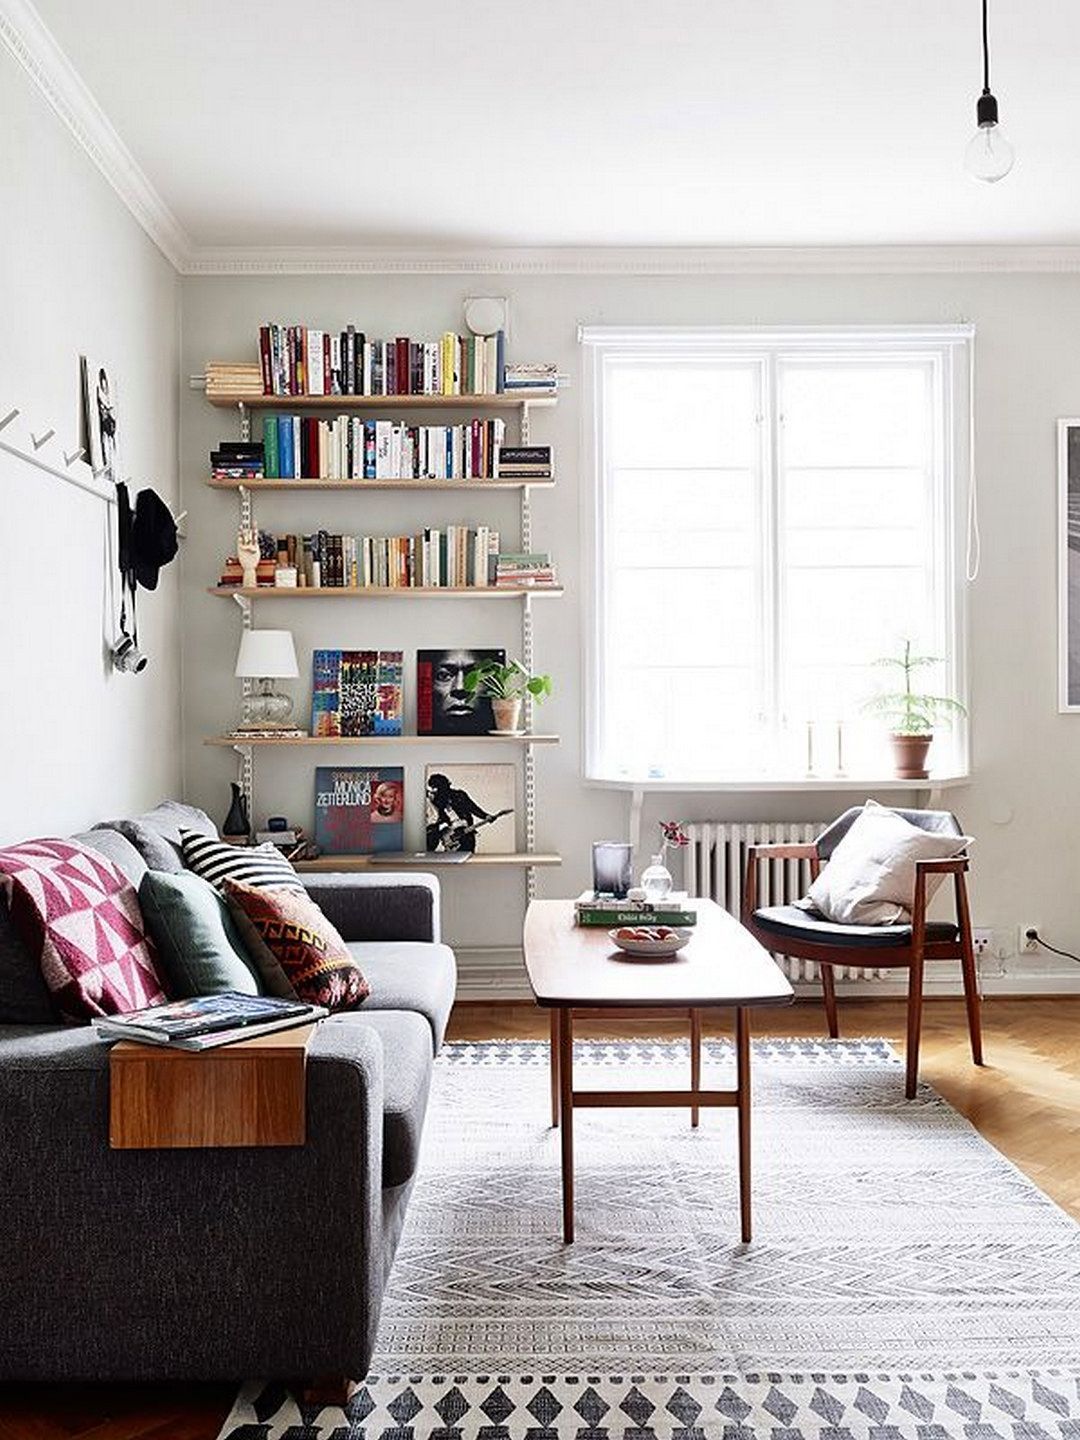 64 Wonderful Minimalist Living Room Decor Ideas https://www.futuristarchitecture.com/11295-minimalist-living-rooms.html